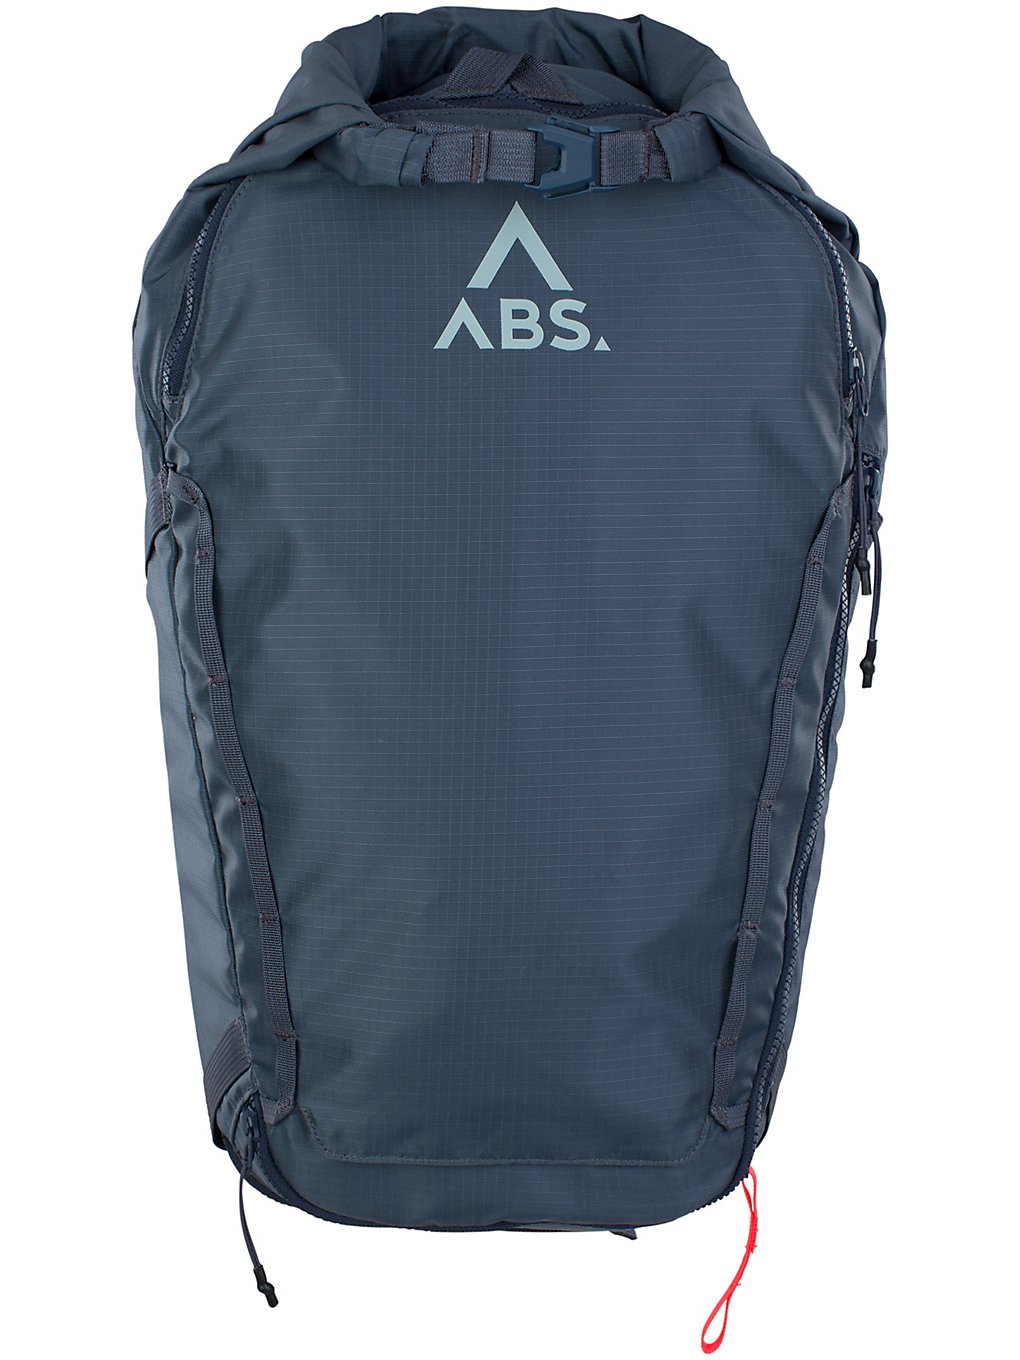 ABS A.Light Tour Extension 25-30L Backpack dusk